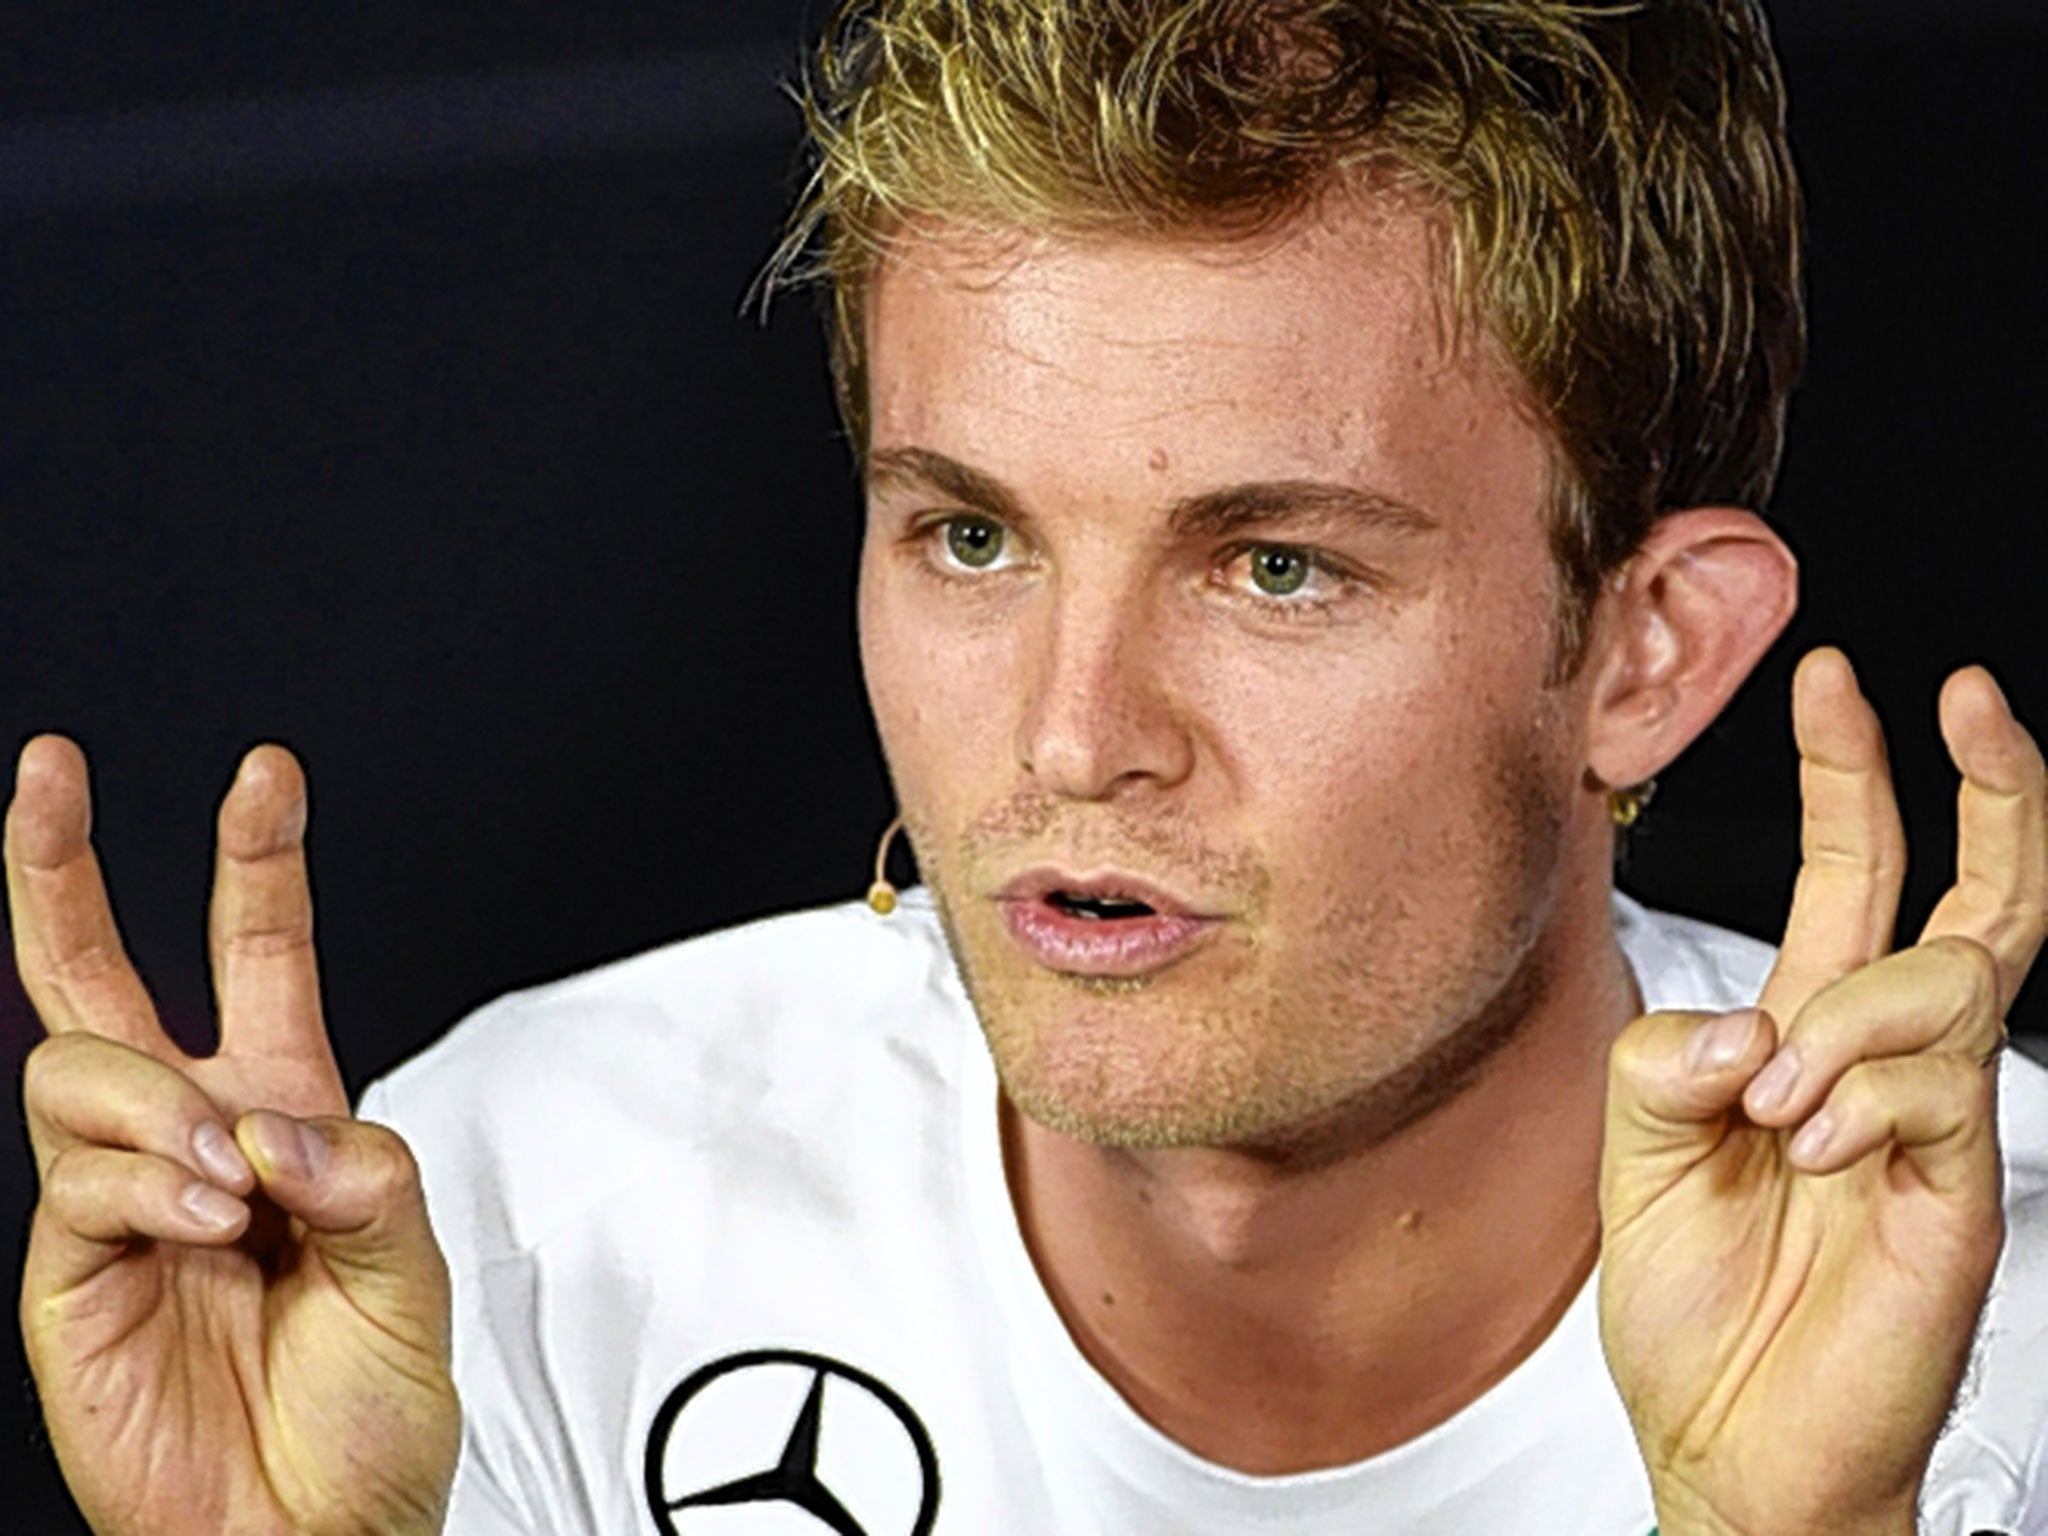 Nico Rosberg said the incident had left him ‘distraught’